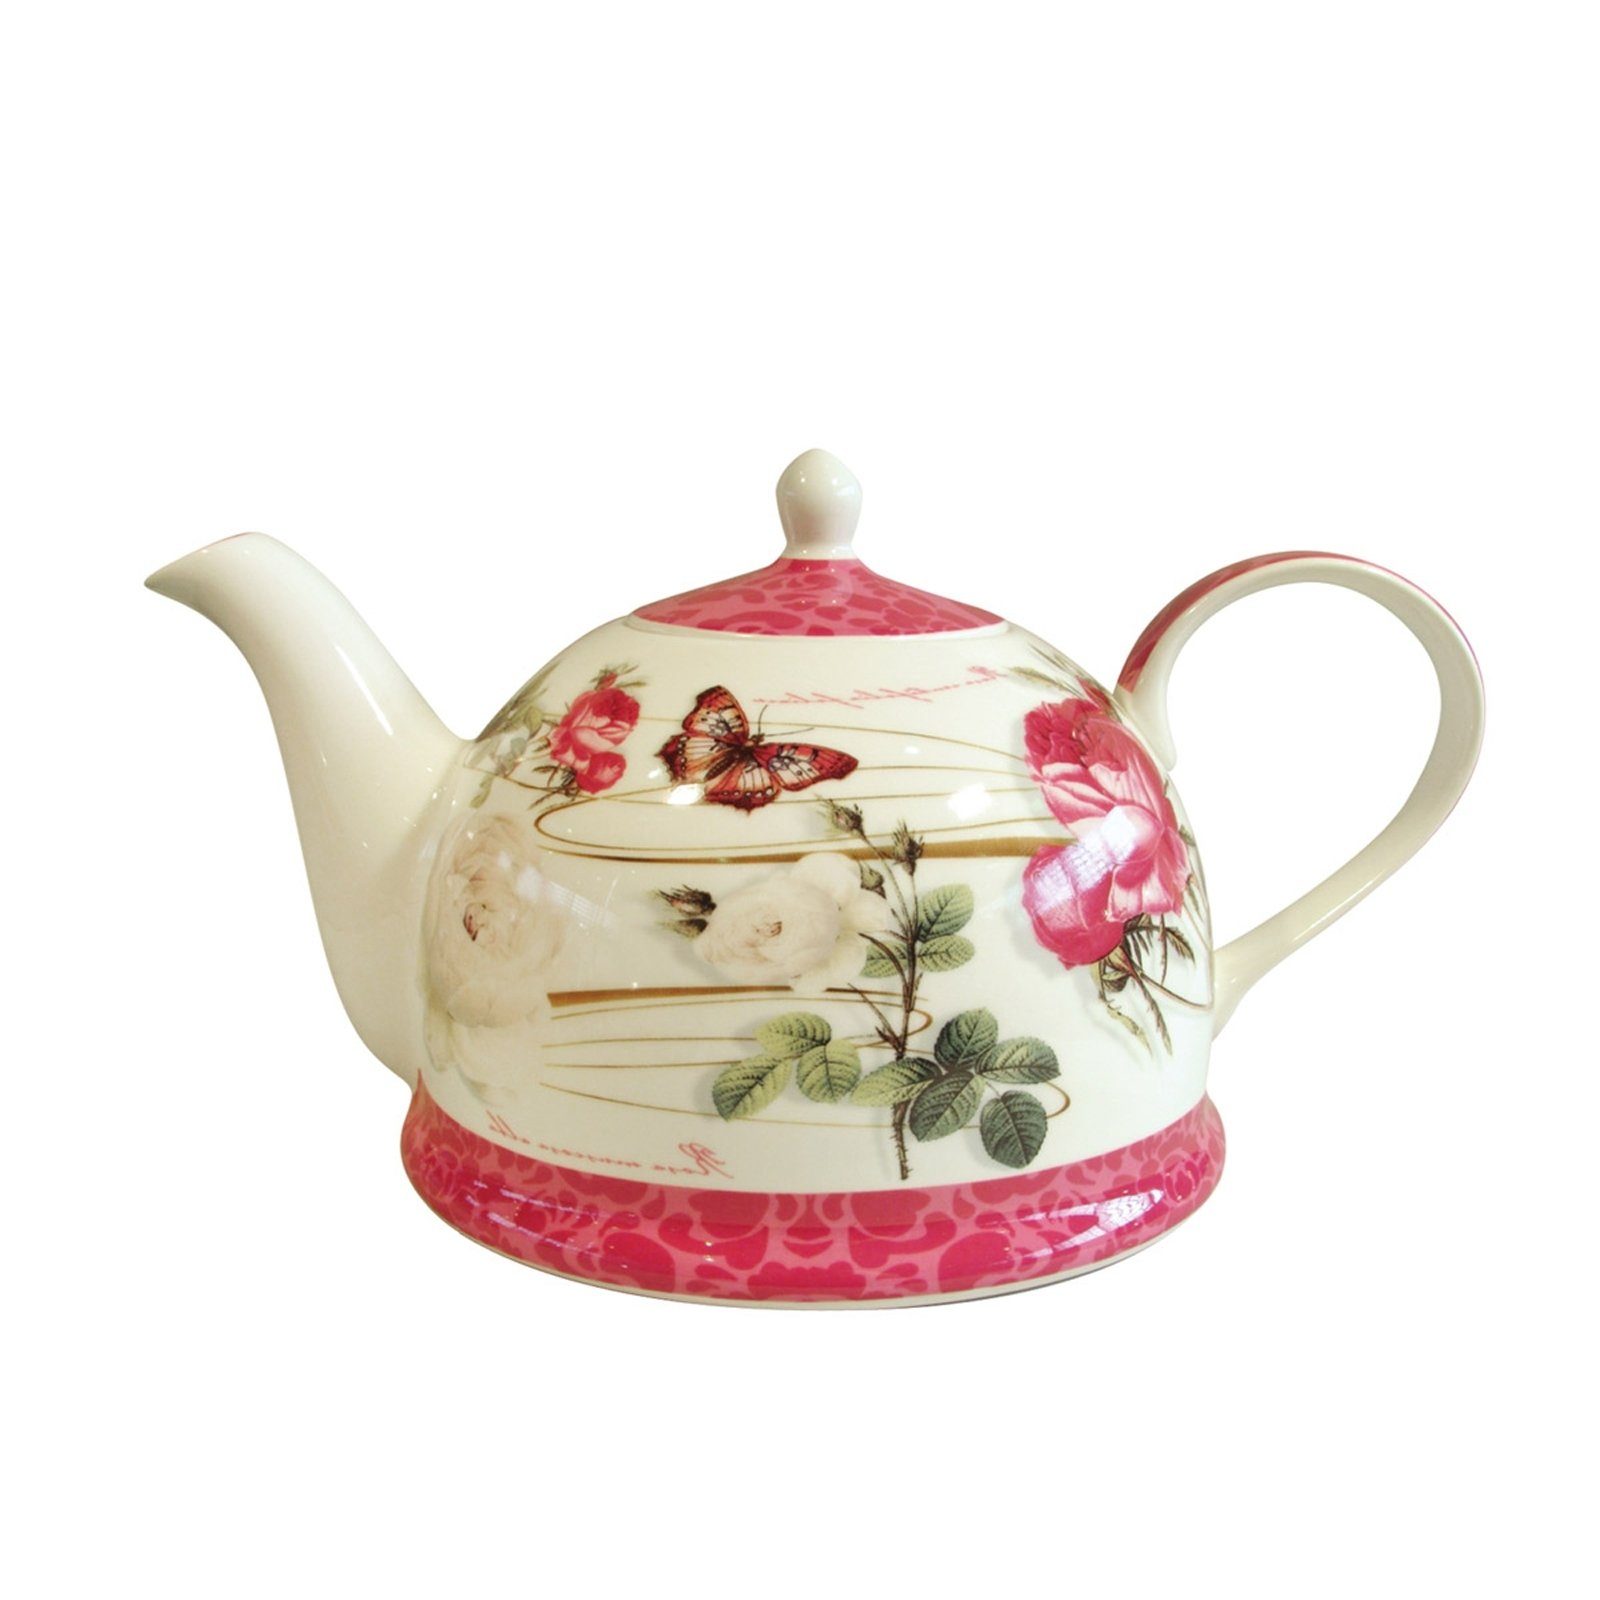 Jameson + Tailor Stück), l, Porzellan Iglu-Kanne Teekanne Dekor mit Rose Teekanne 0.9 (Stück, Weiß